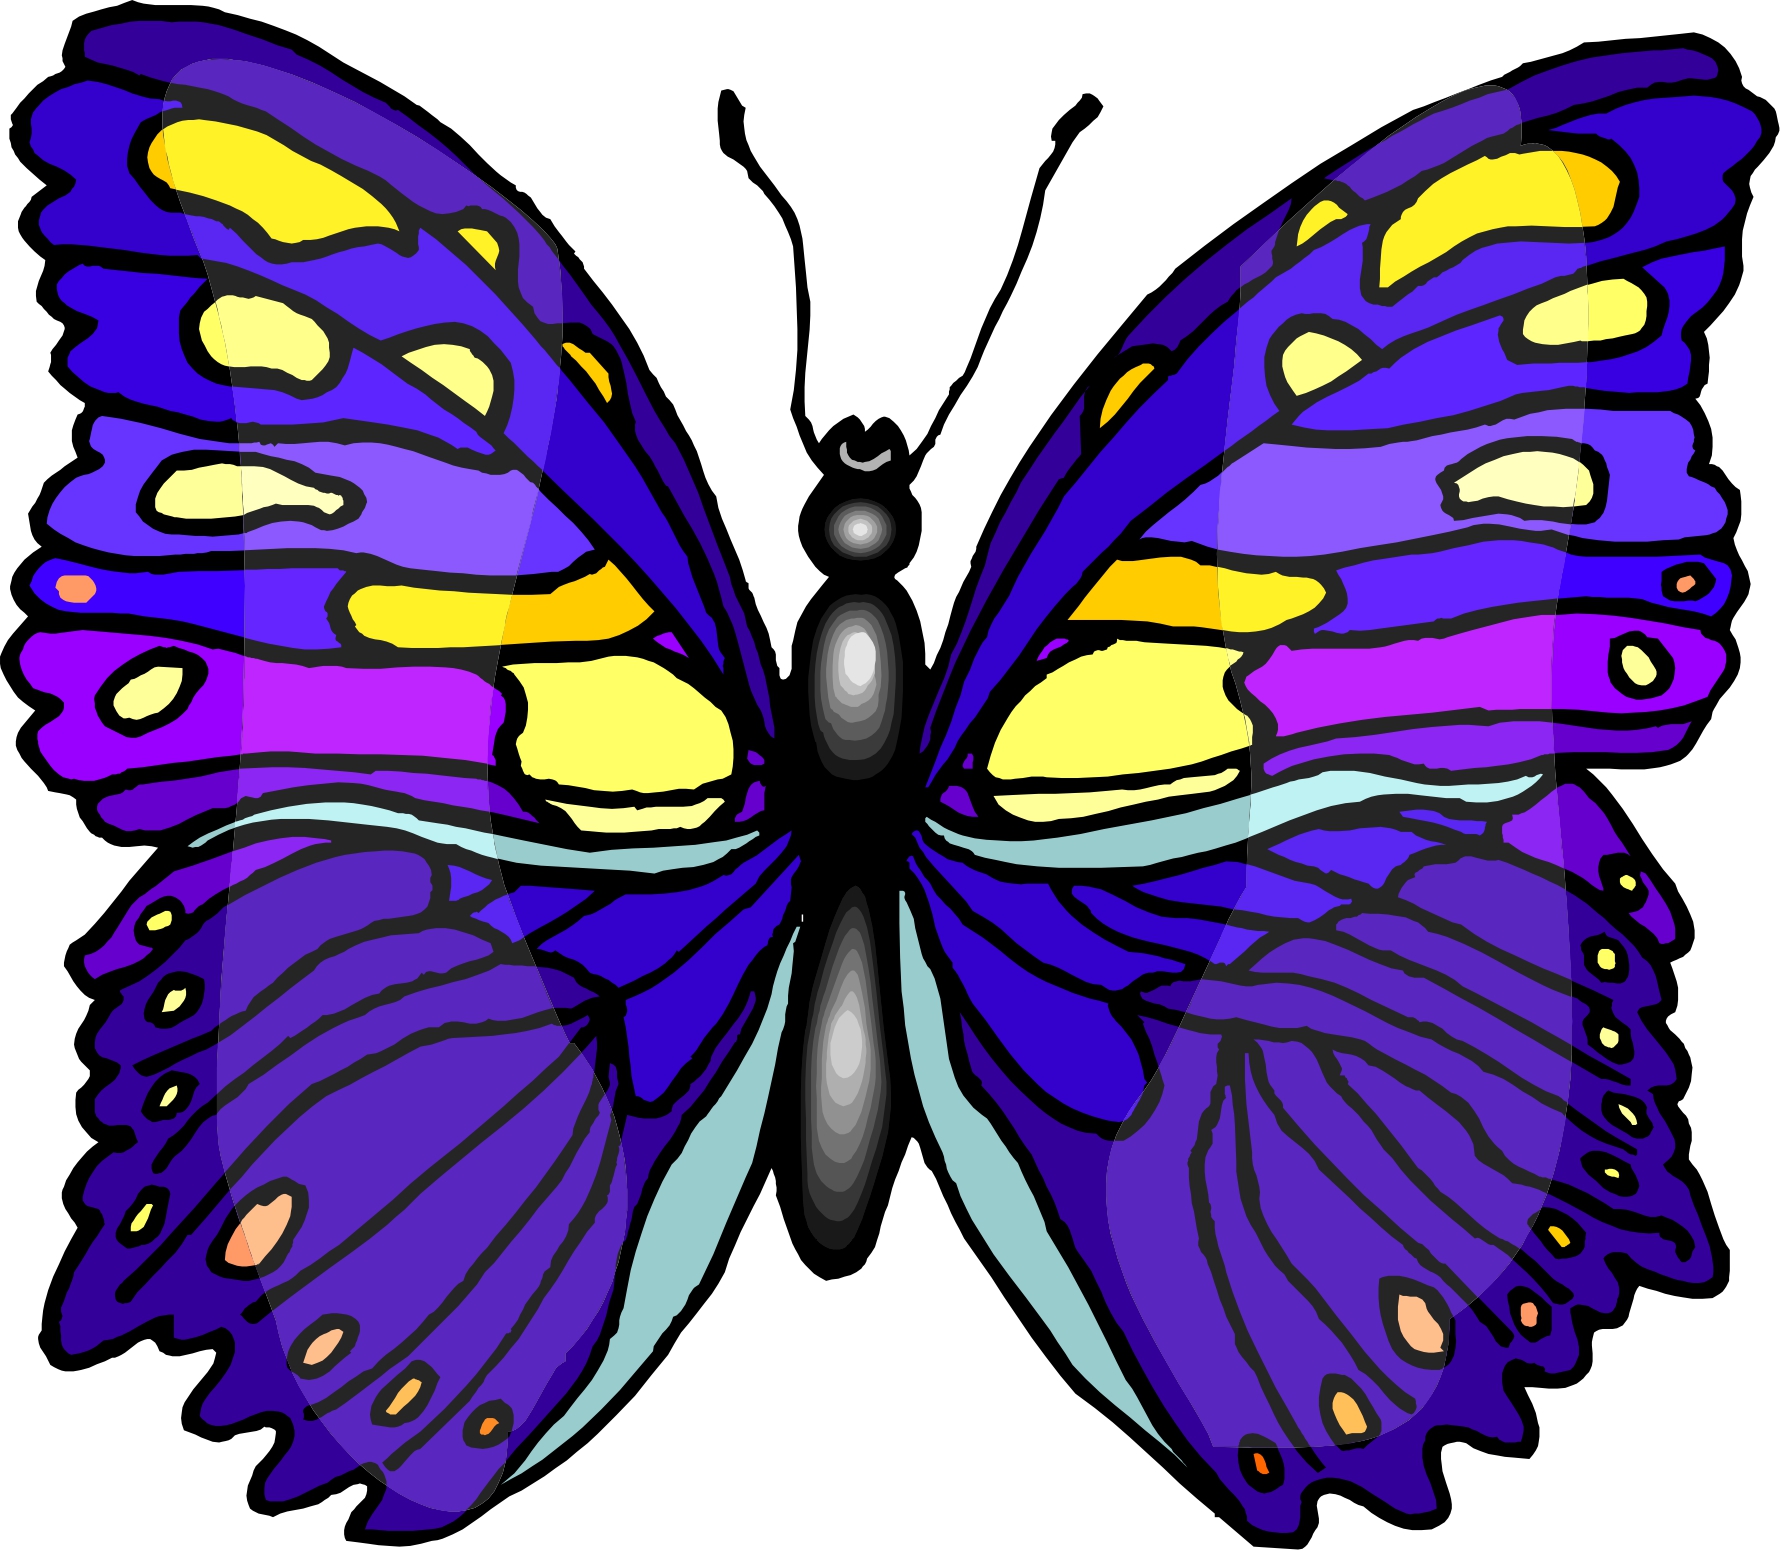 Wallpaper Backgrounds Purple Cartoon Butterfly for Ipad